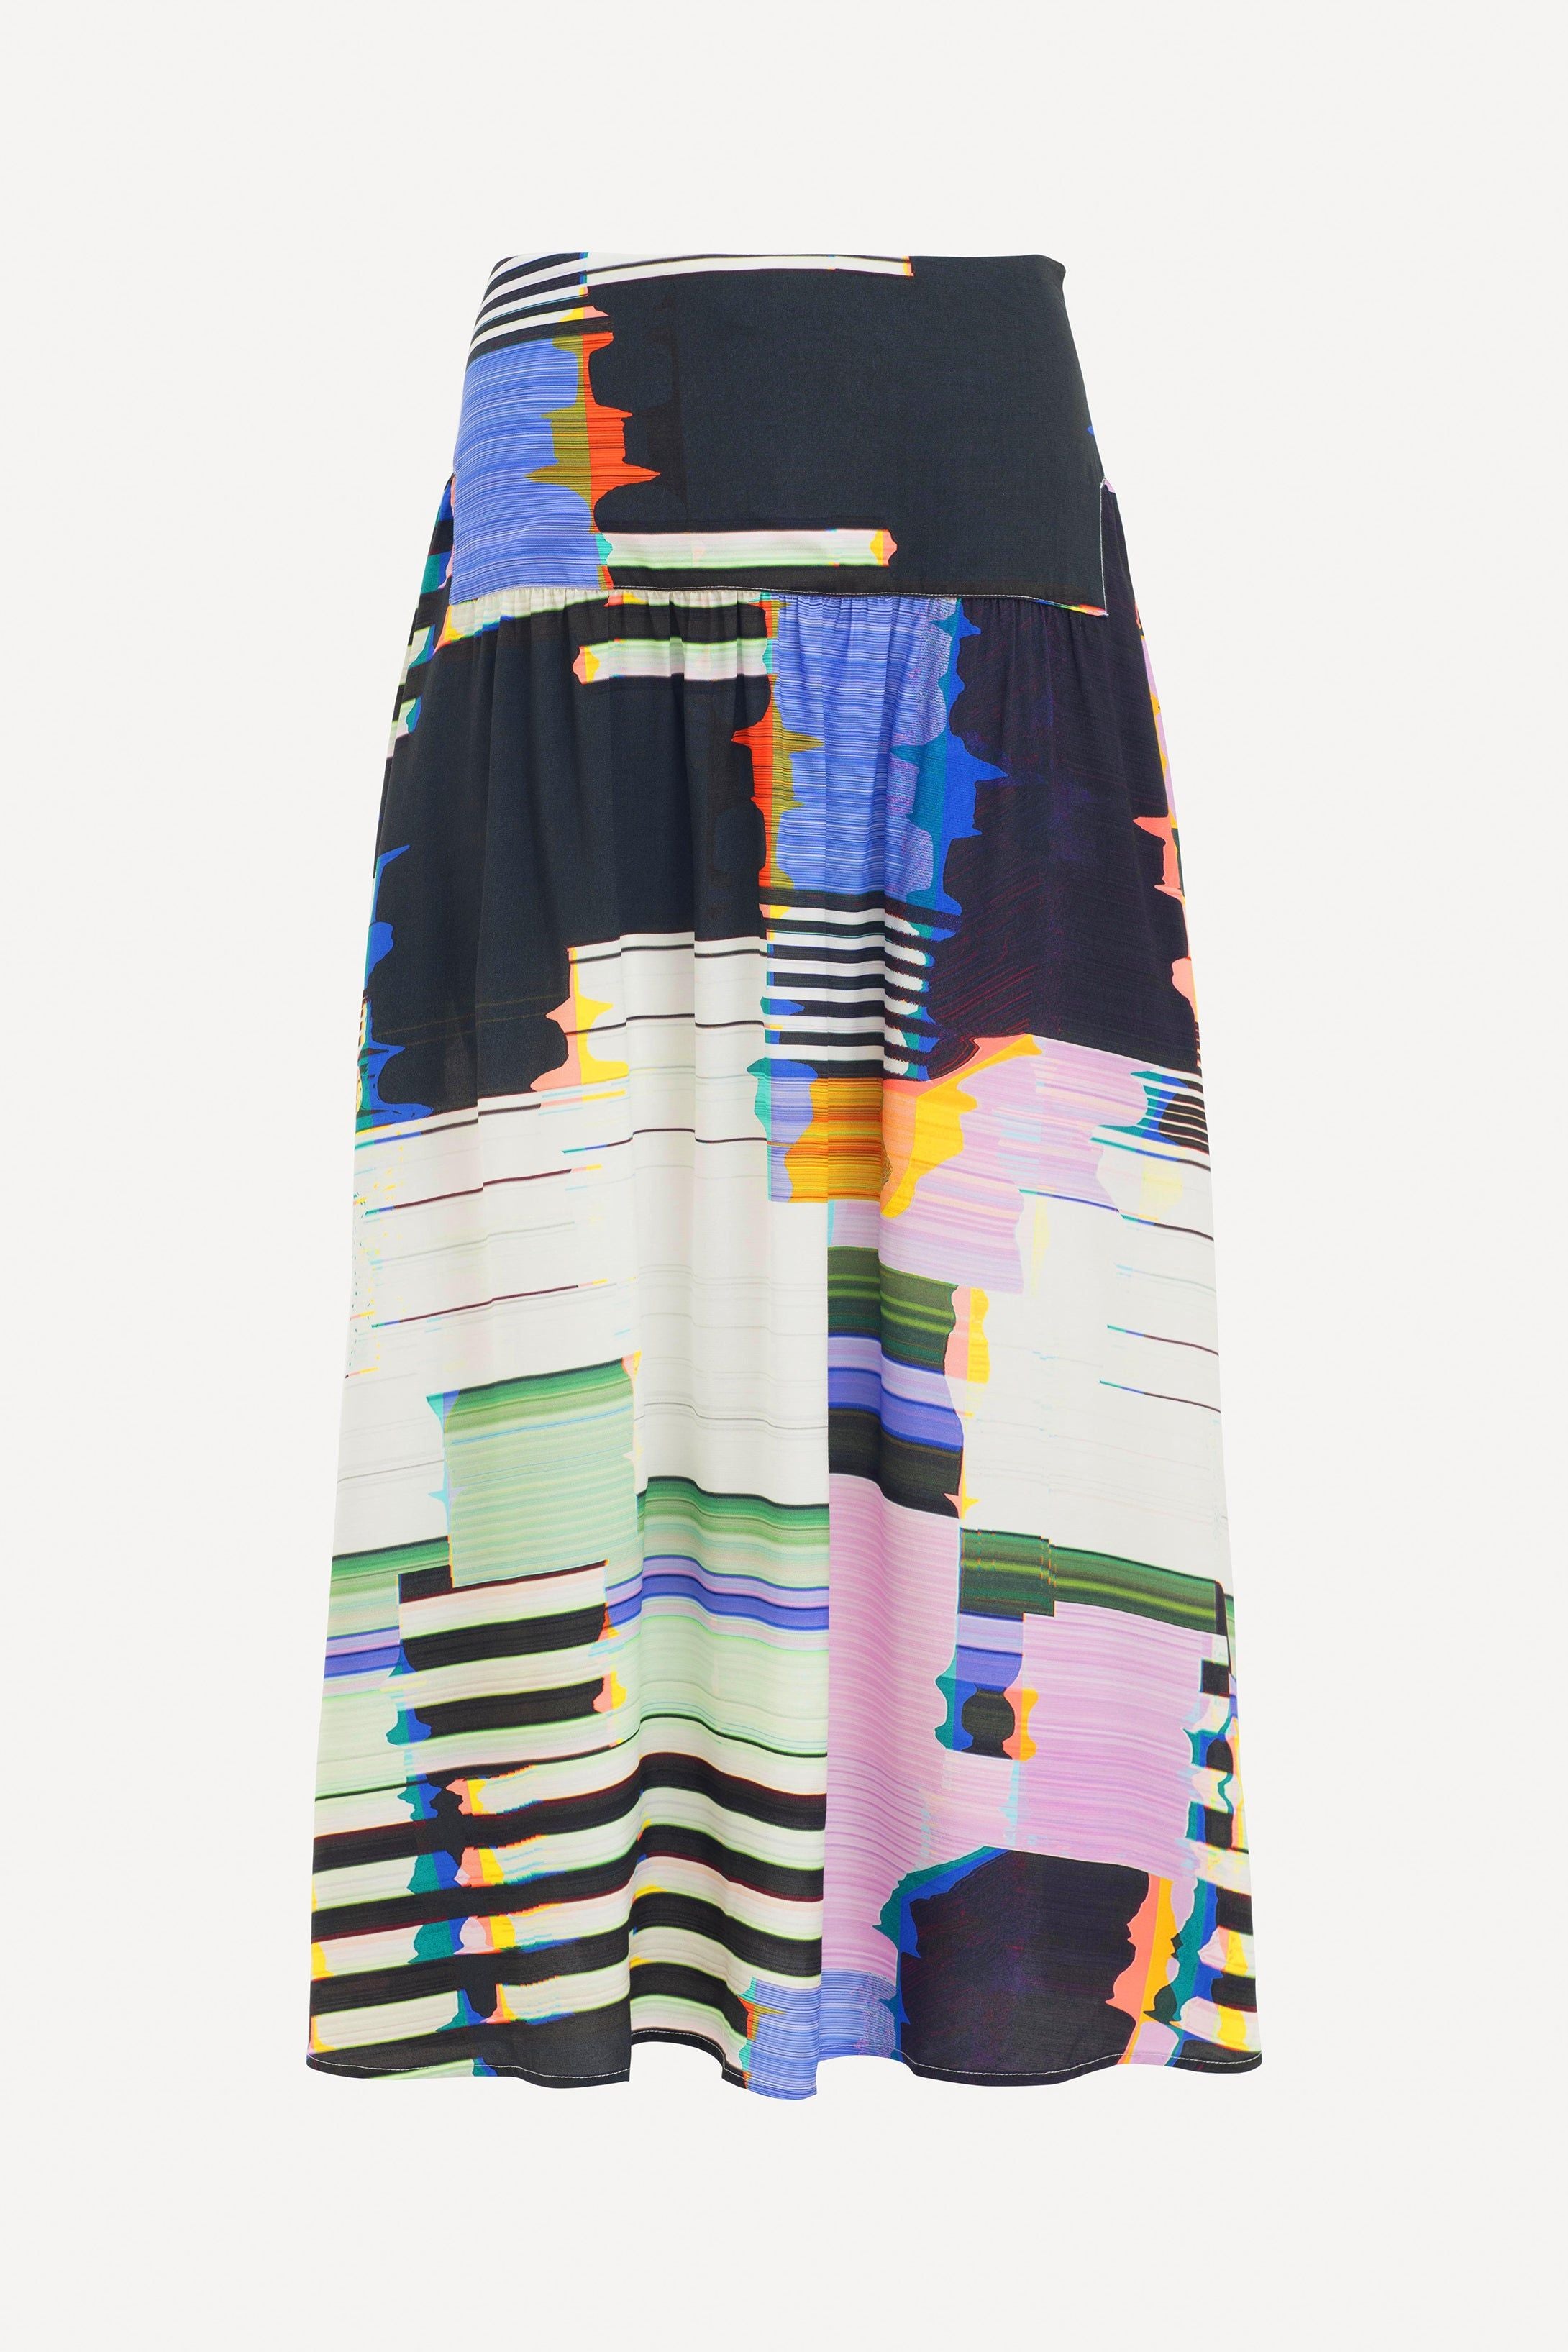 Berg Skirt - Glitch Print